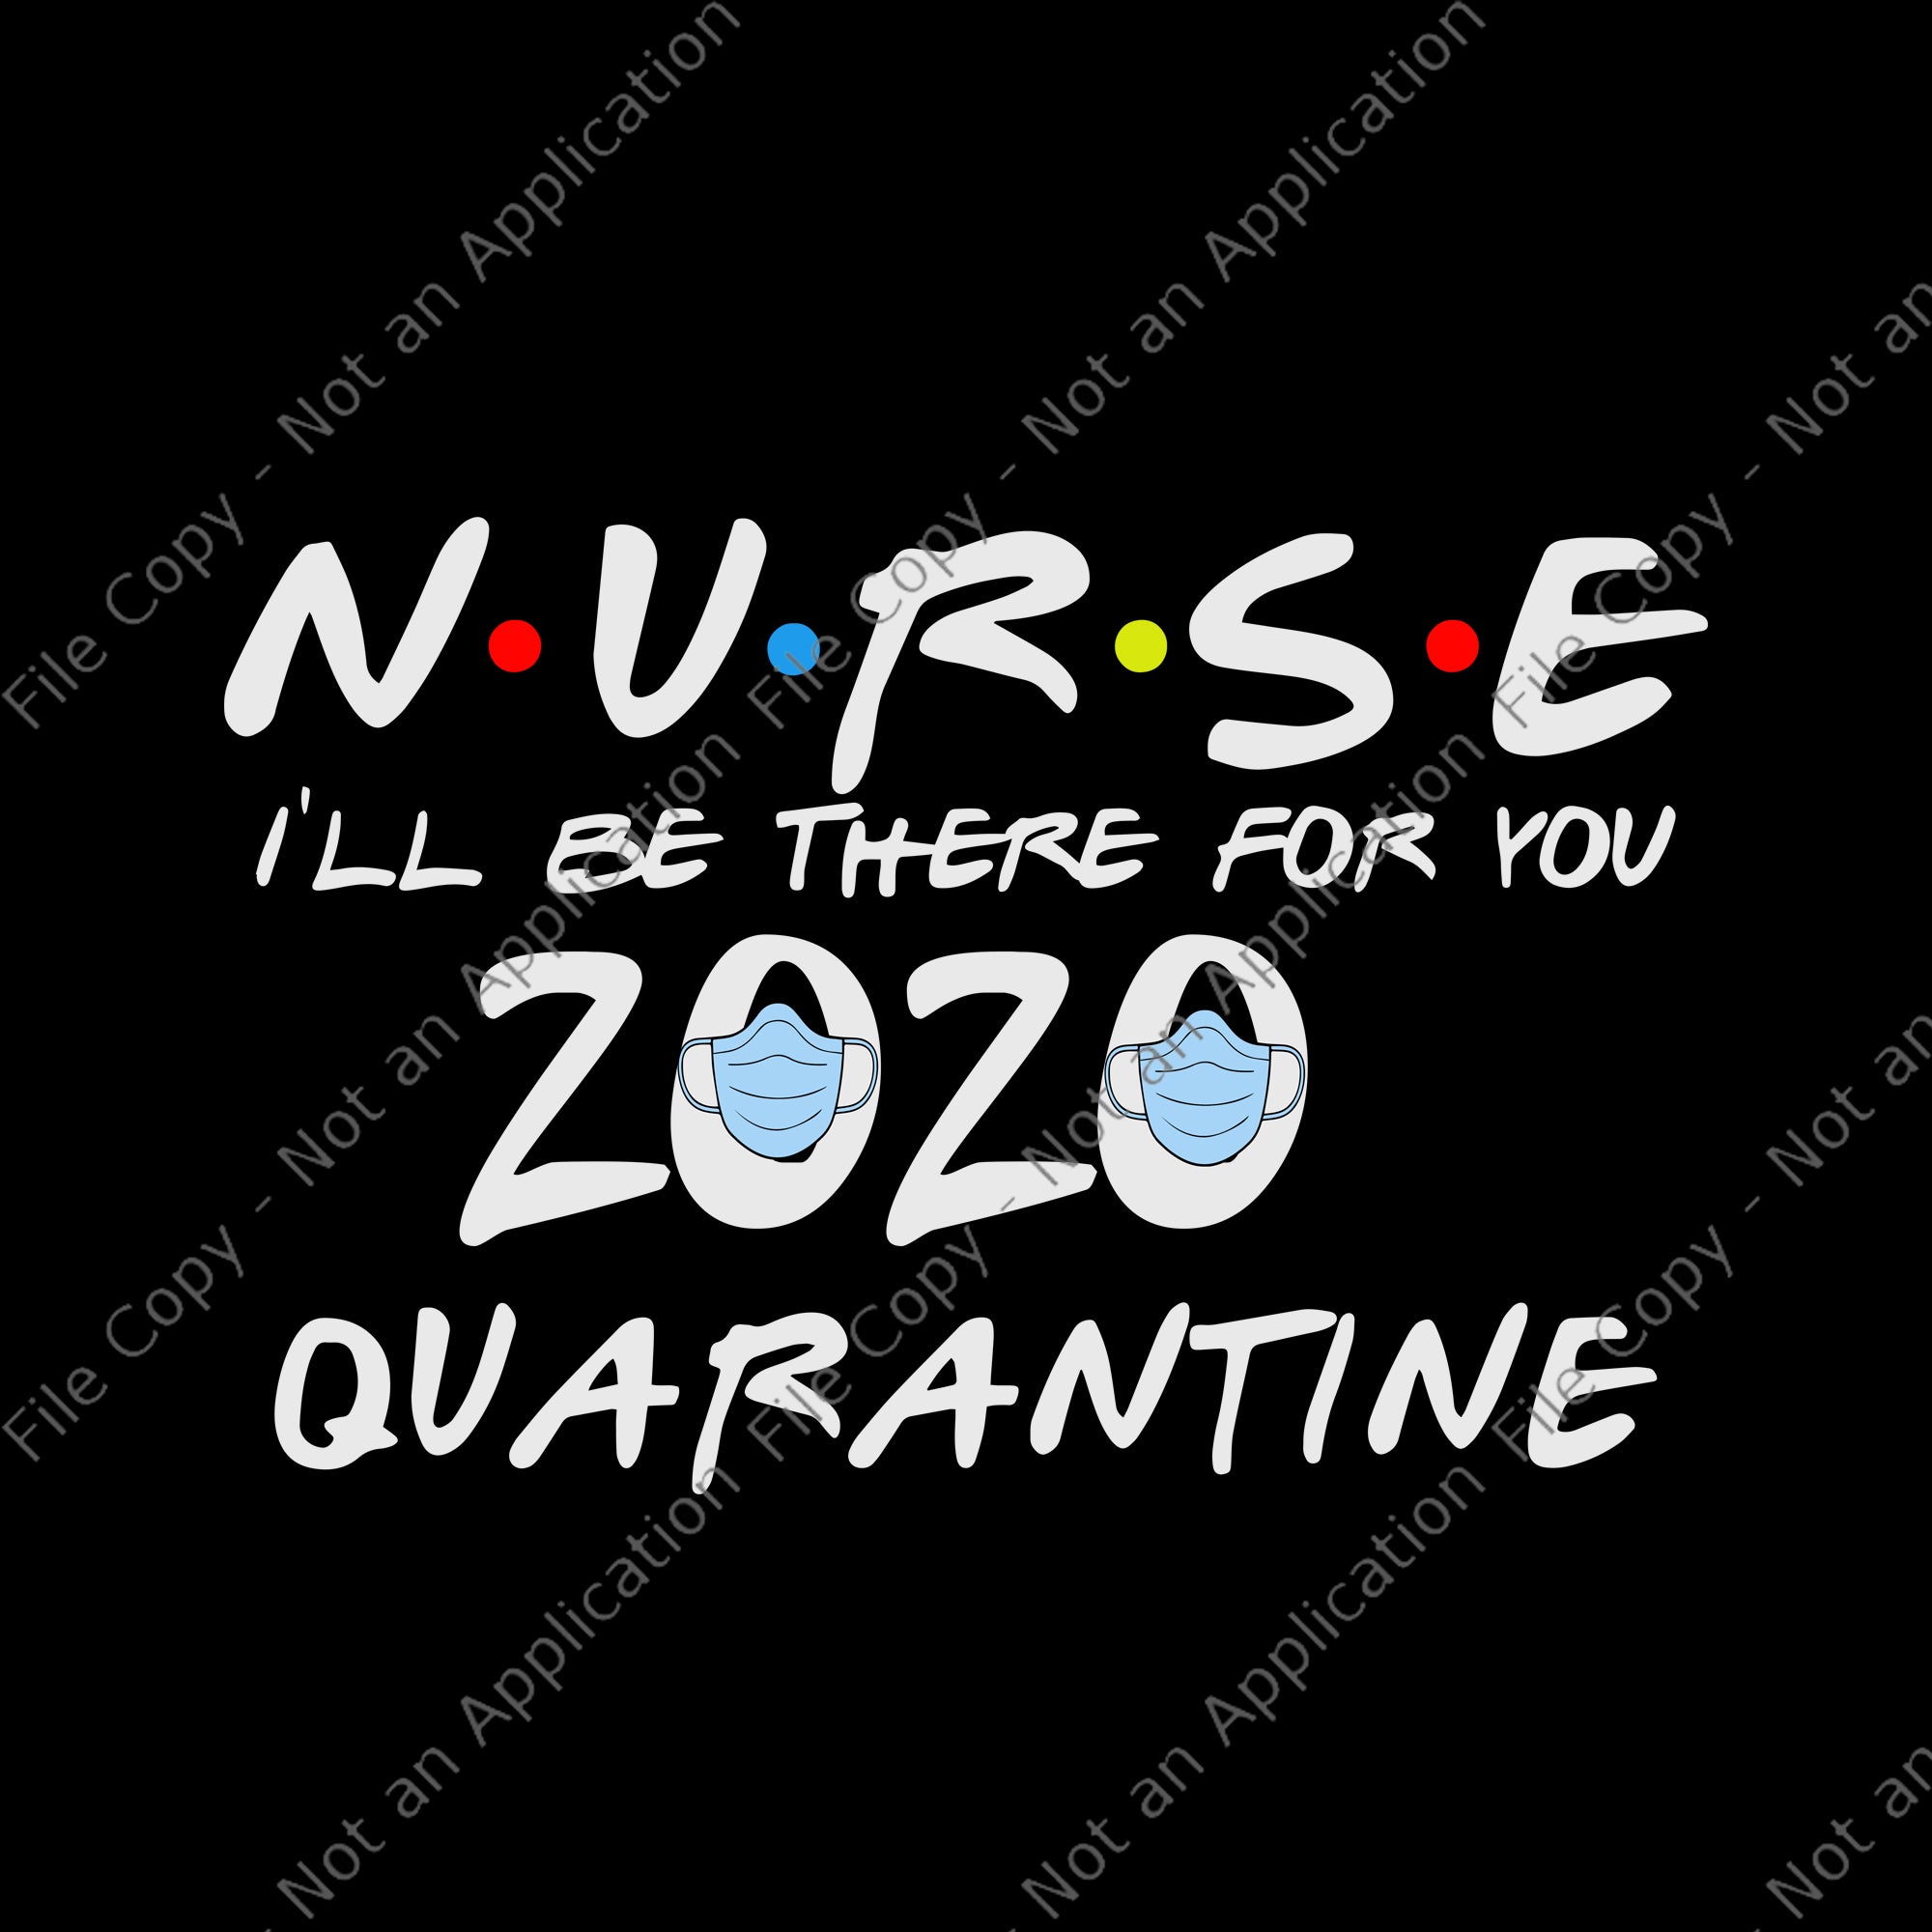 Nurse 2020 svg, nurse i’ll be there for you 2020 quarantine svg, nurse i’ll be there for you 2020 quarantine, nurse 2020 svg, nurse 2020